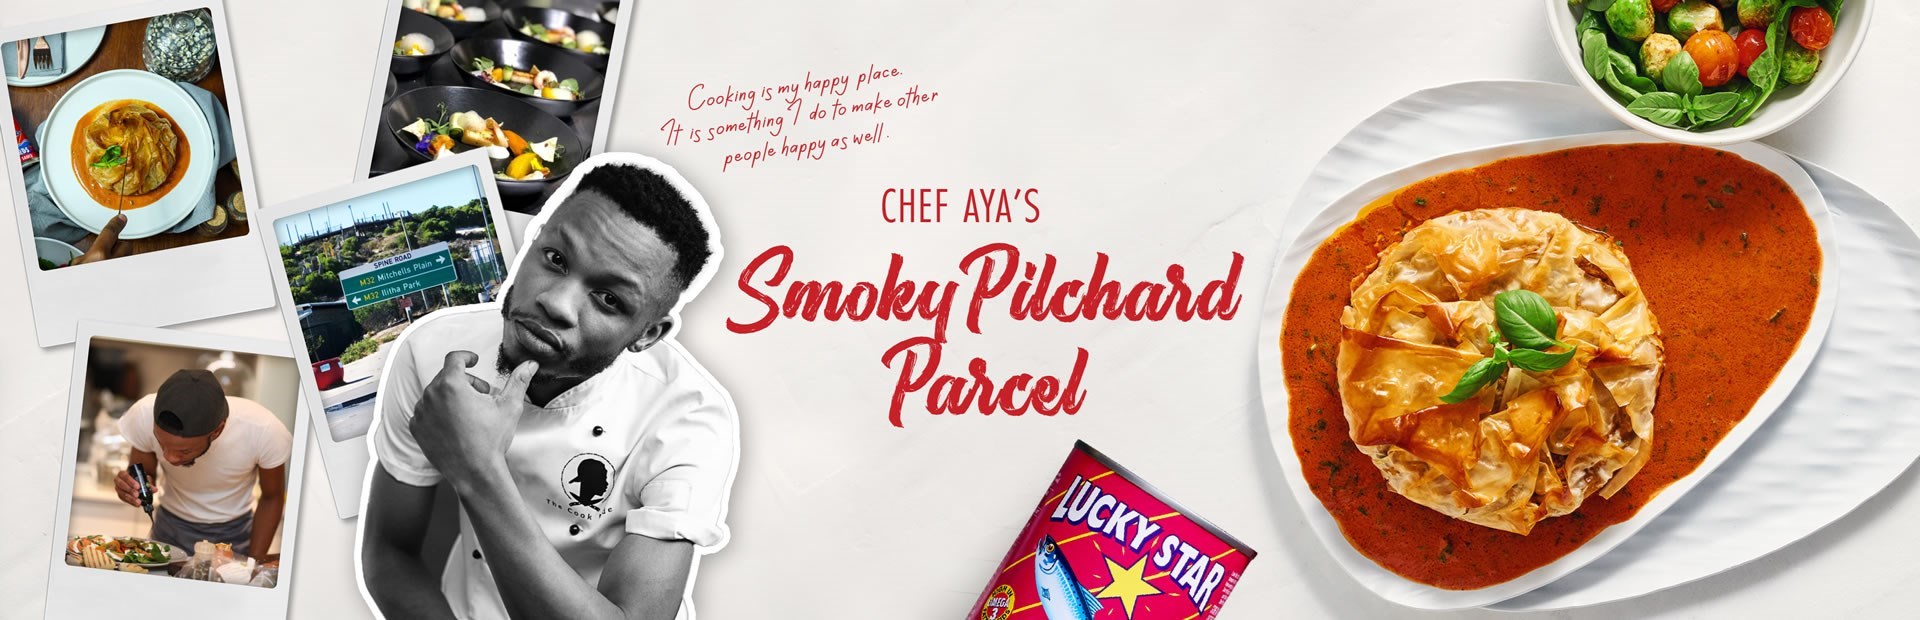 CHEF AYA’S Smoky Pilchard Parcel